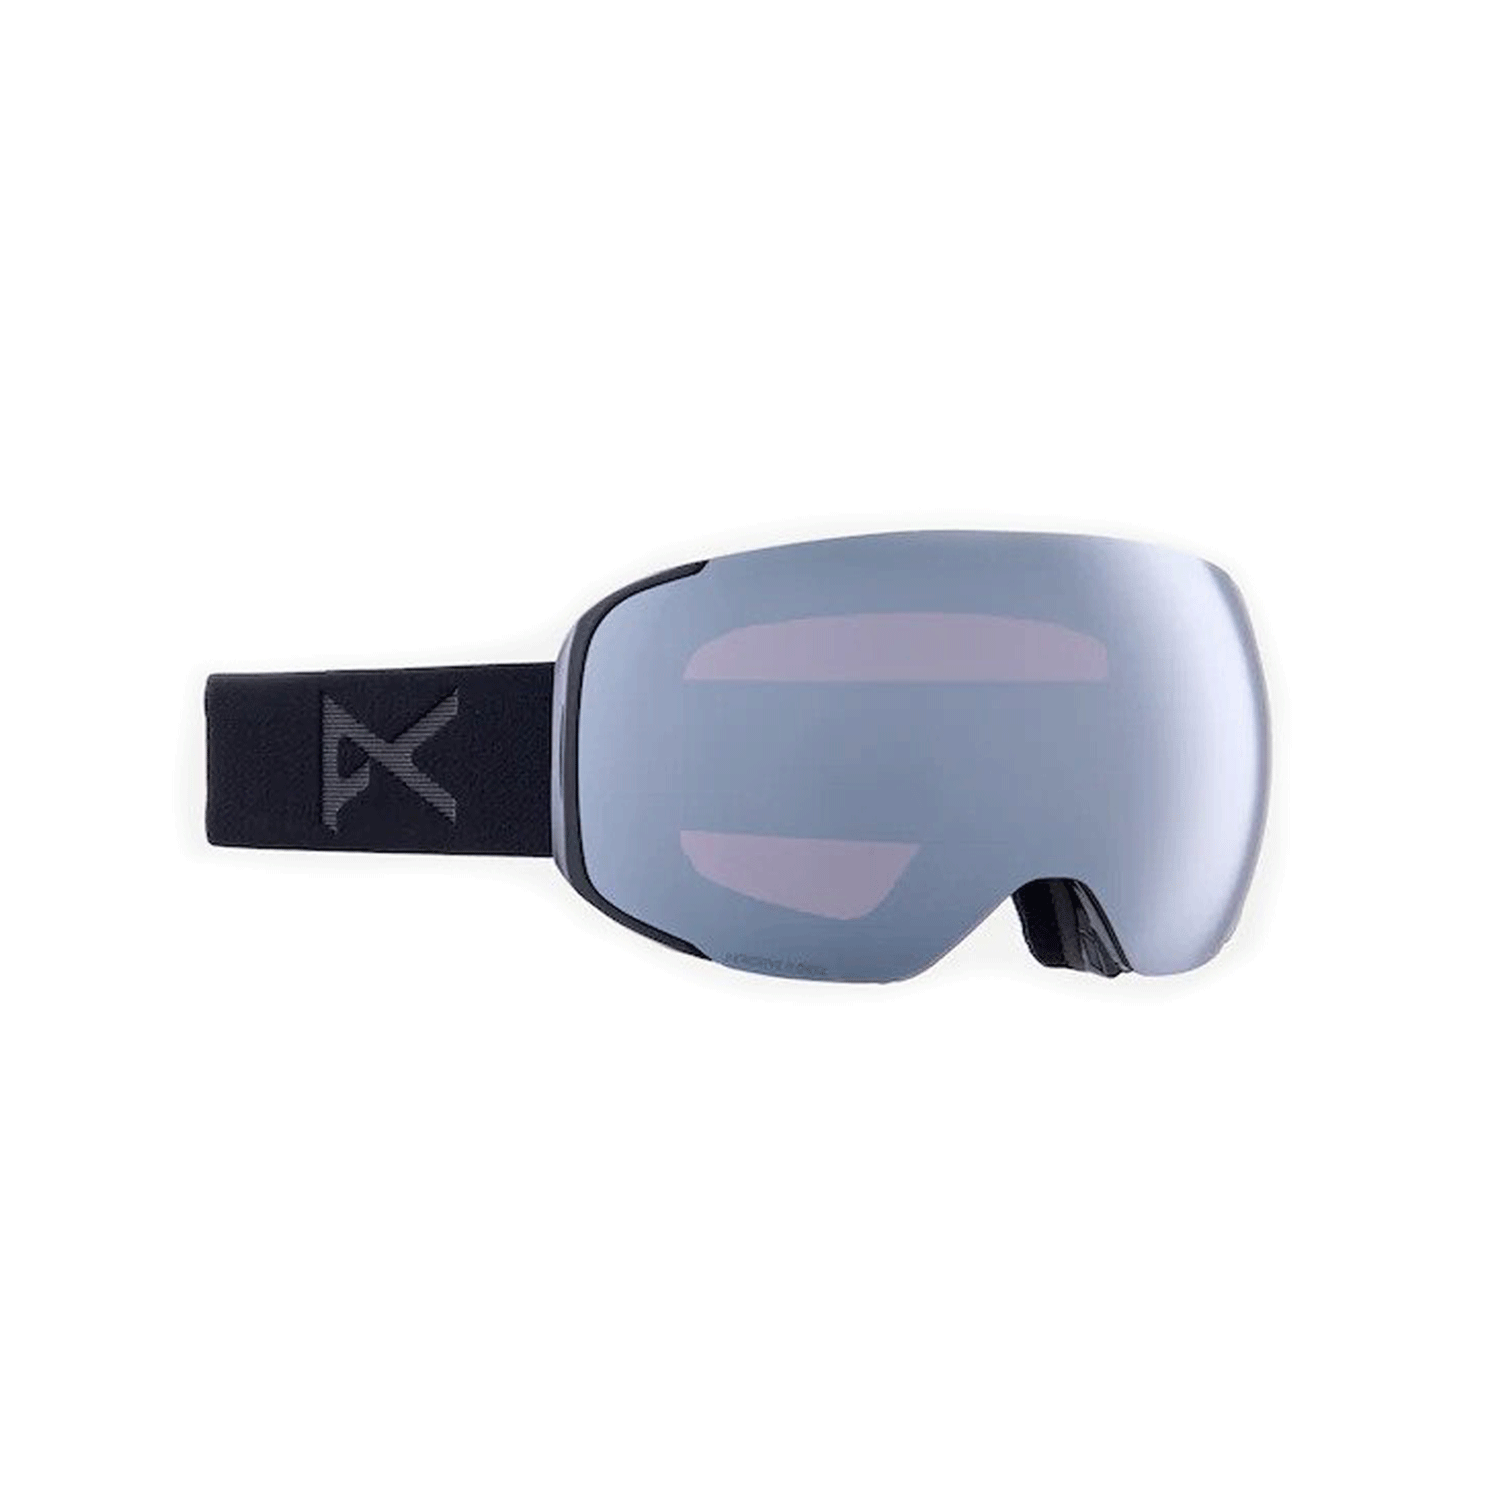 Anon - M2 MFI Goggles - Smoke/Perceive Sunny Onyx + Bonus Lens NEW FOR 2023 SALE